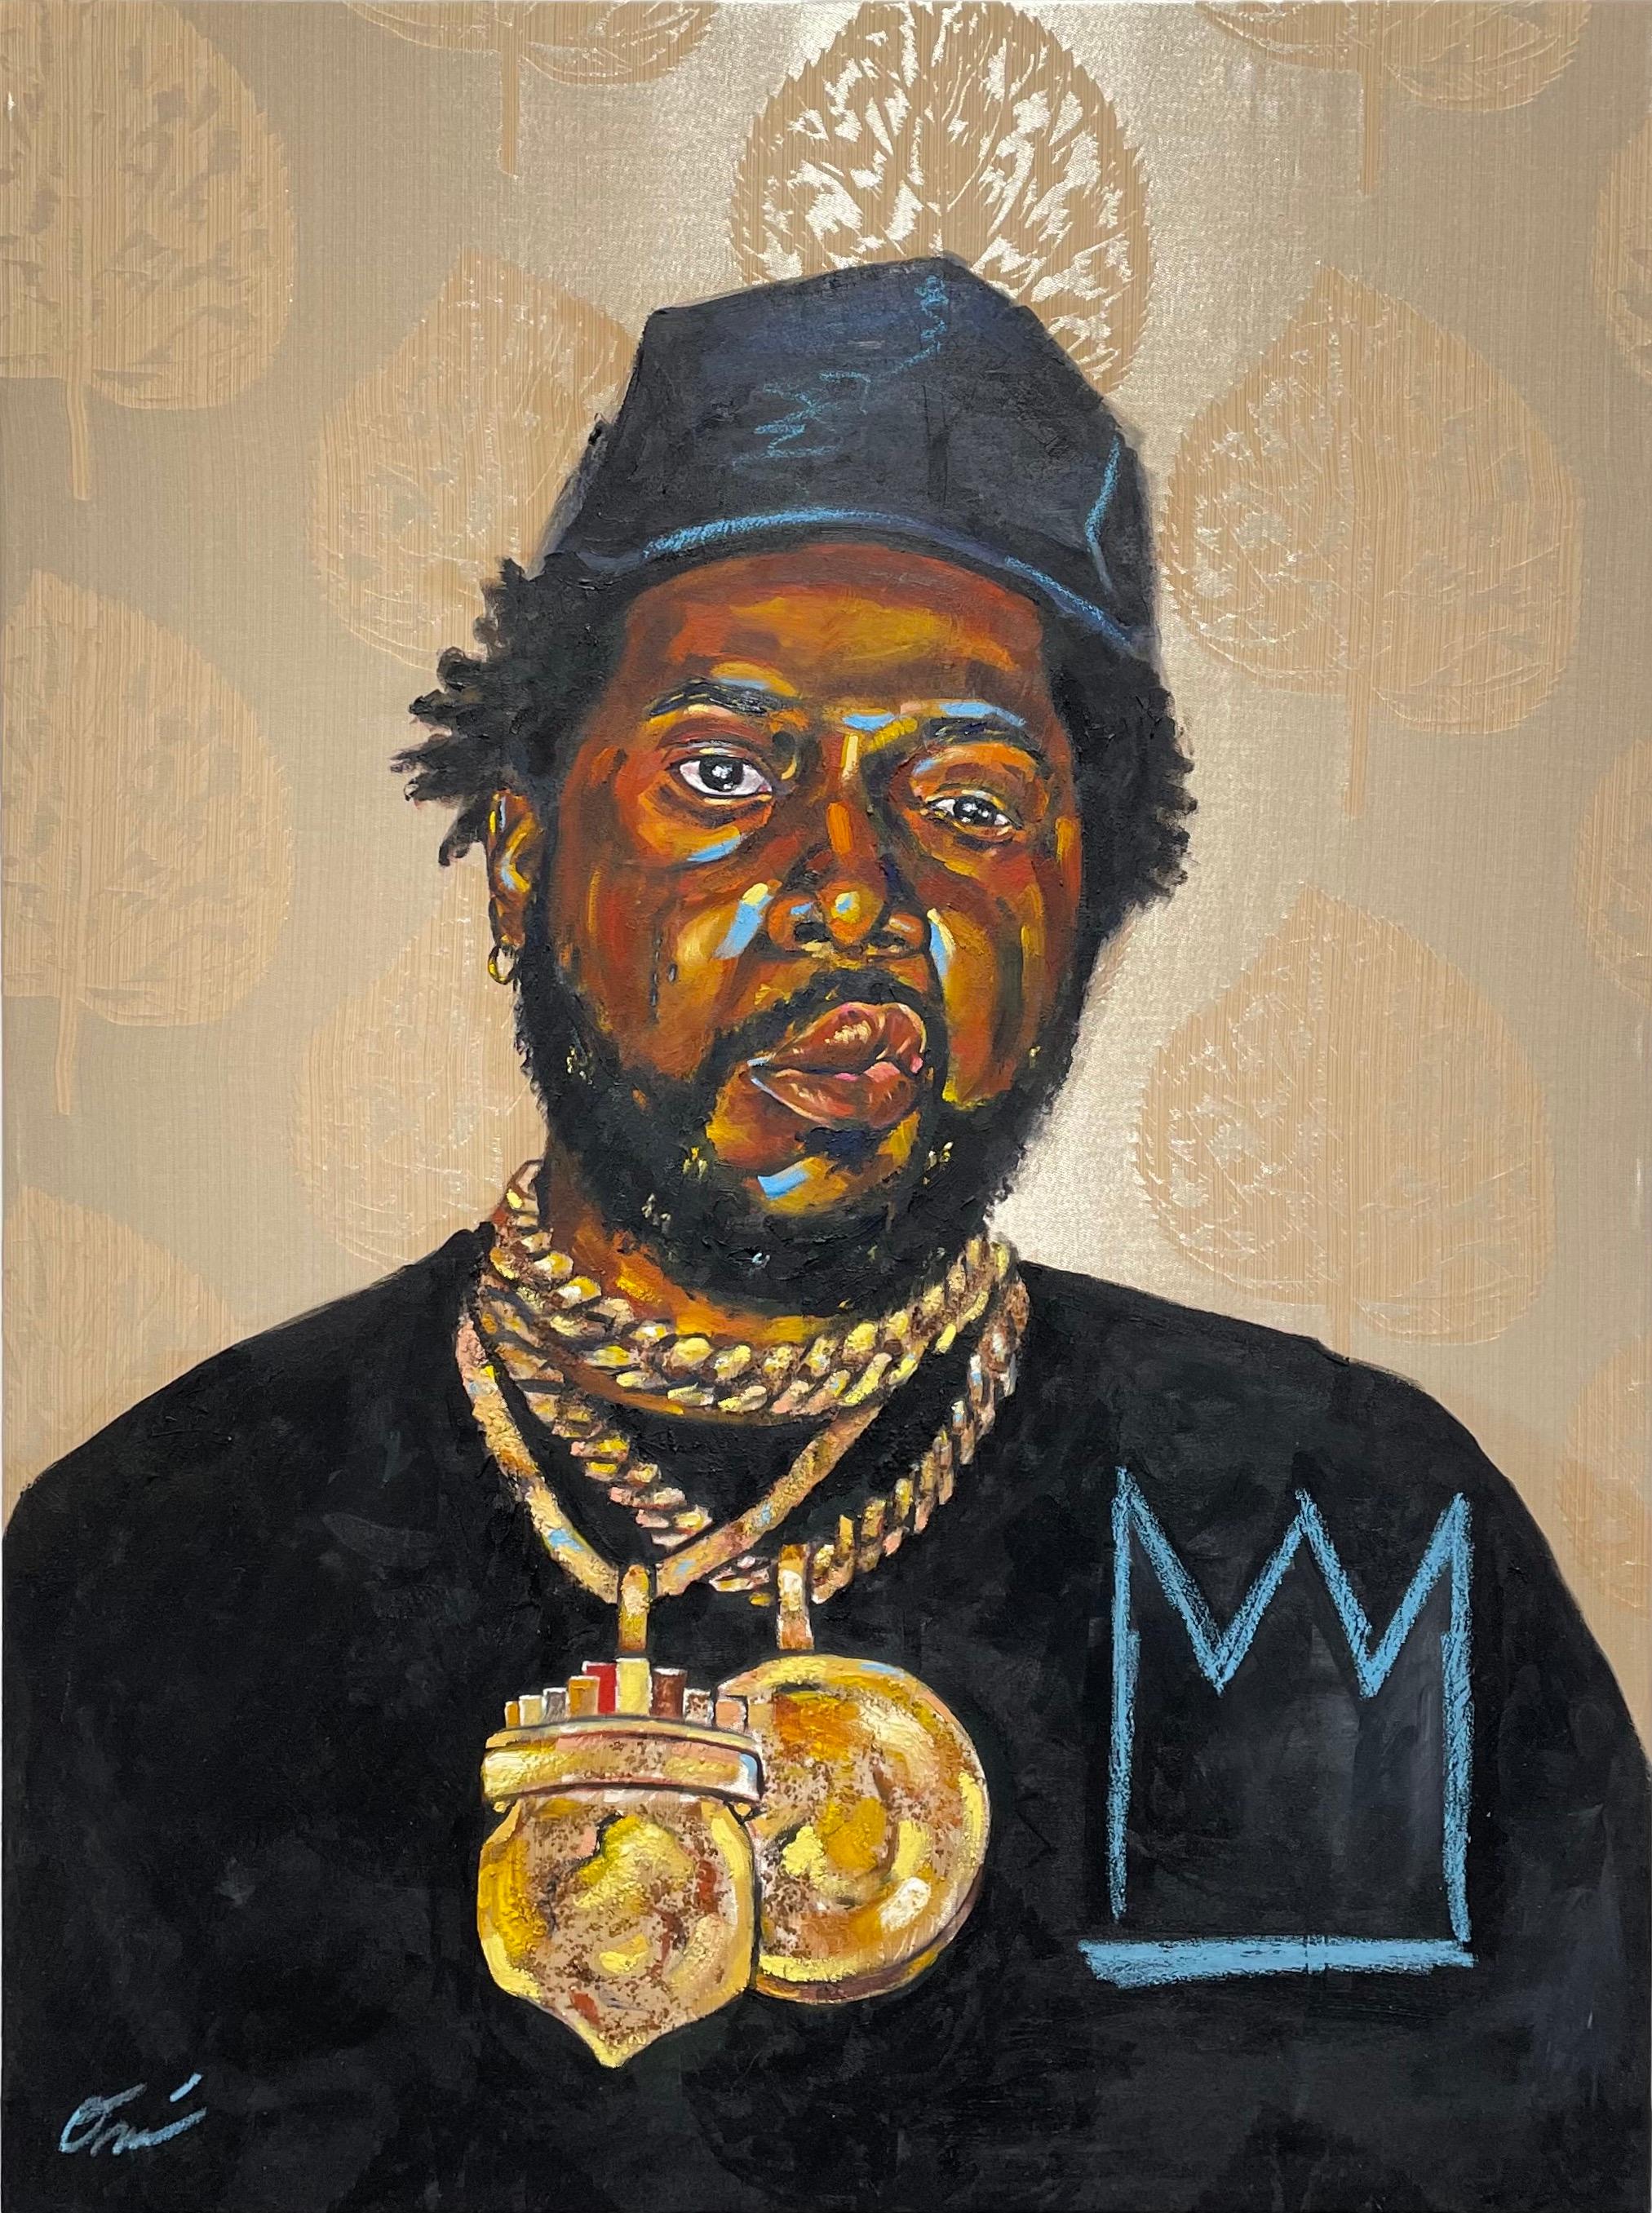 LA MAQUINA - Portrait Painting of Conway the Machine, Rapper, Gold, Black